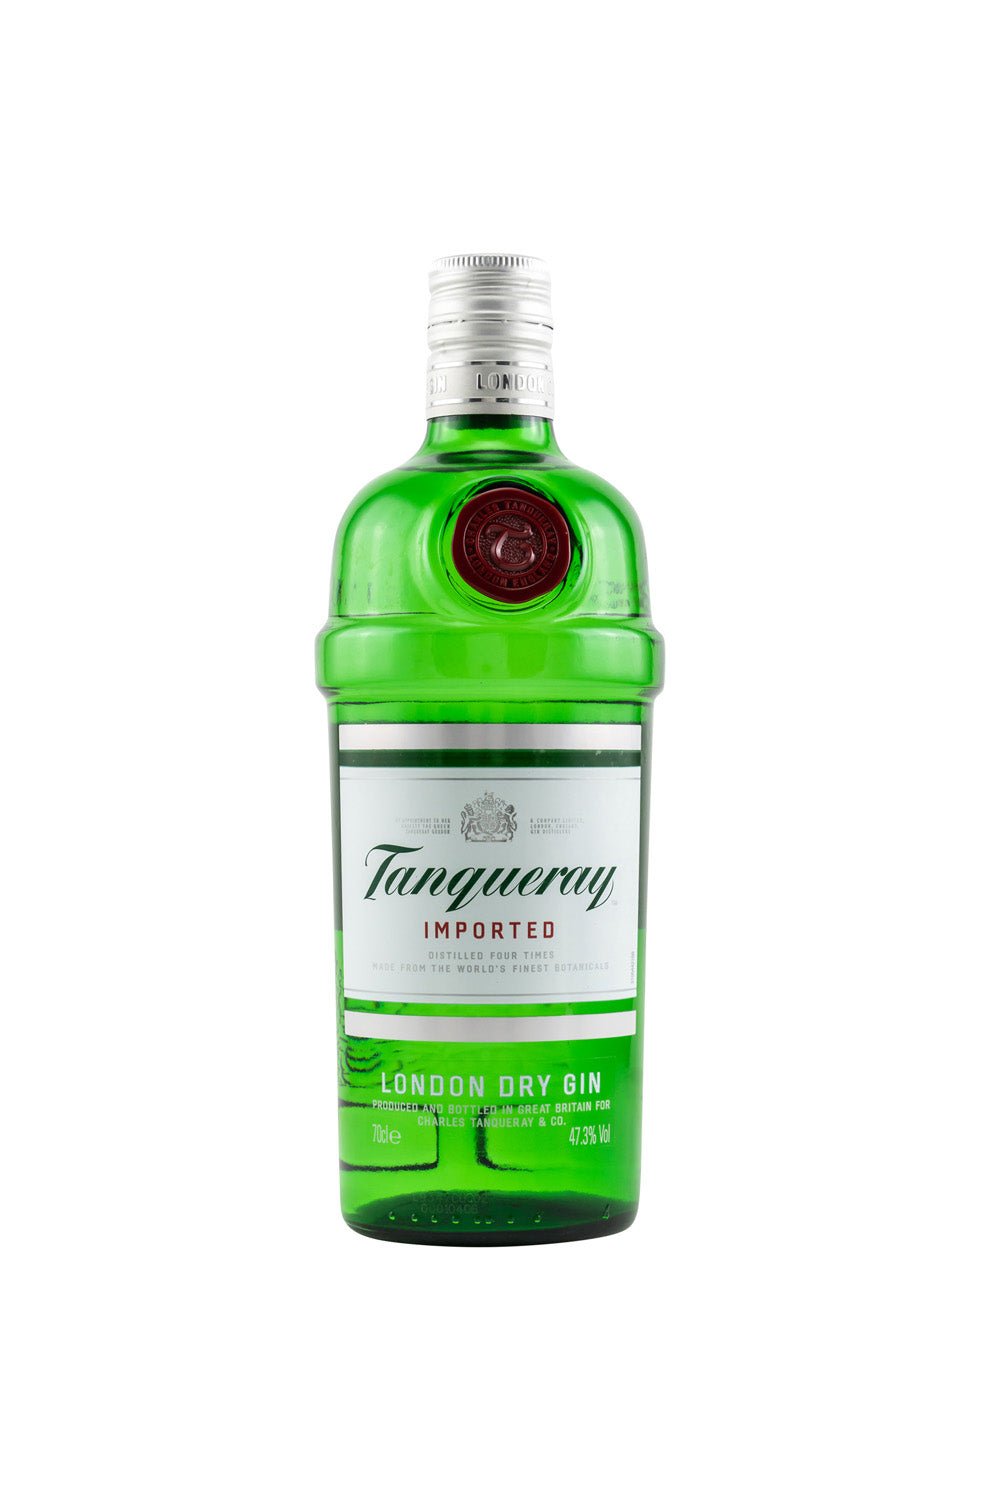 Tanqueray London Dry Gin 47,3% vol. 700ml - Maltimore